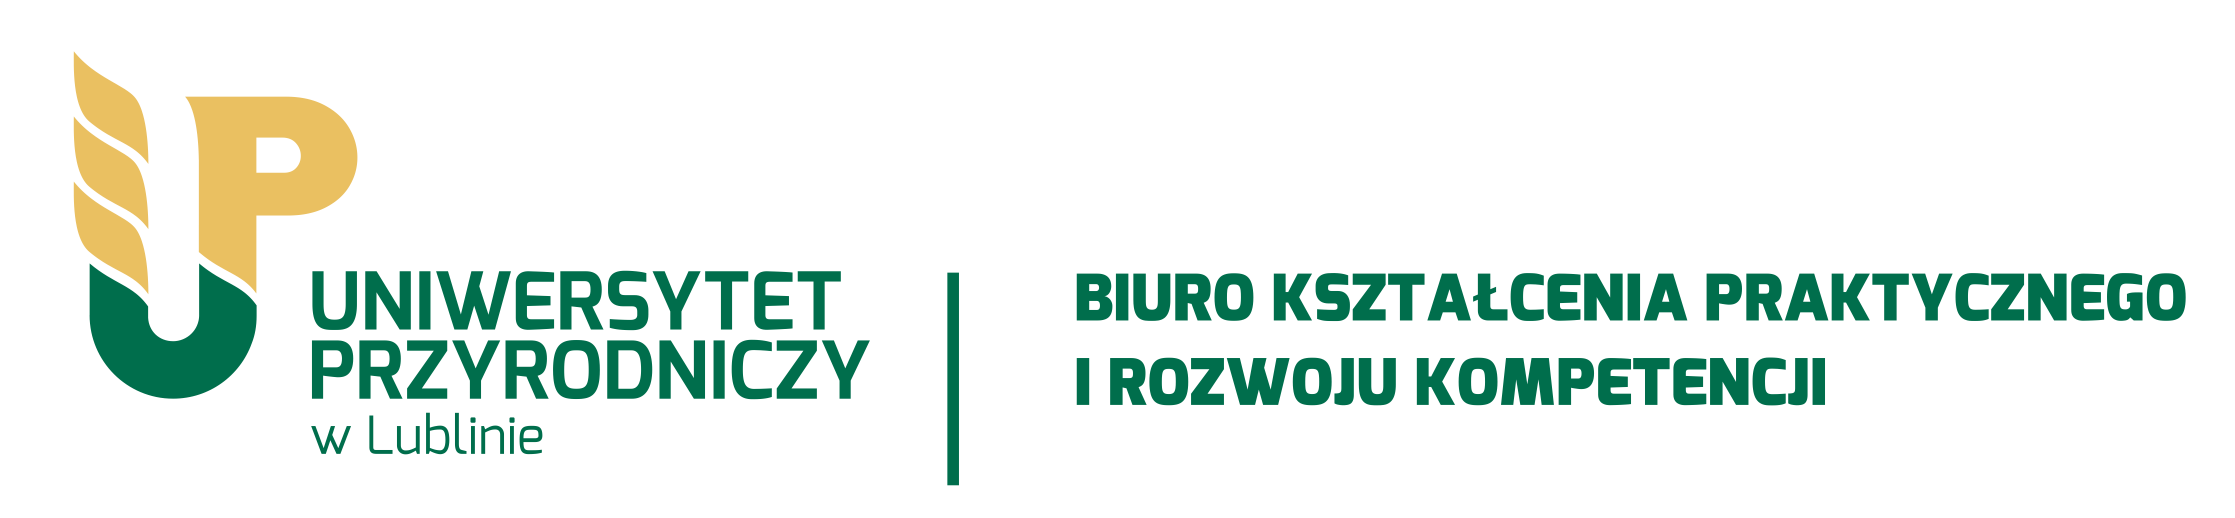 logotyp-biuro-ksztalcenia-FULL-HD.png (81,72 kB)